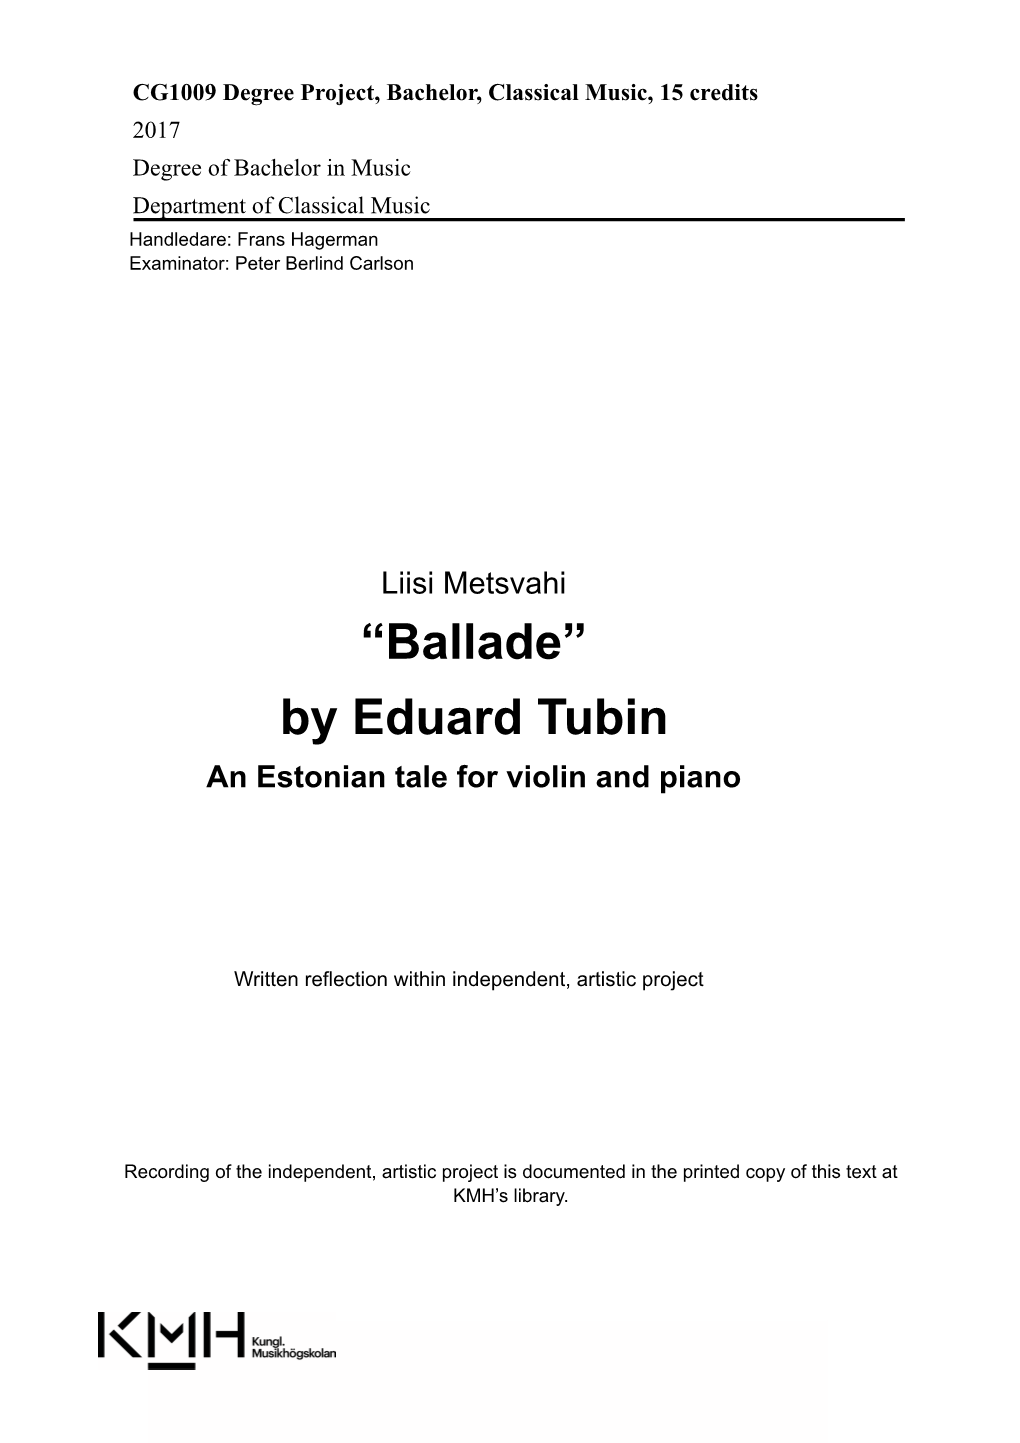 Liisi Metsvahi “Ballade” by Eduard Tubin an Estonian Tale for Violin and Piano